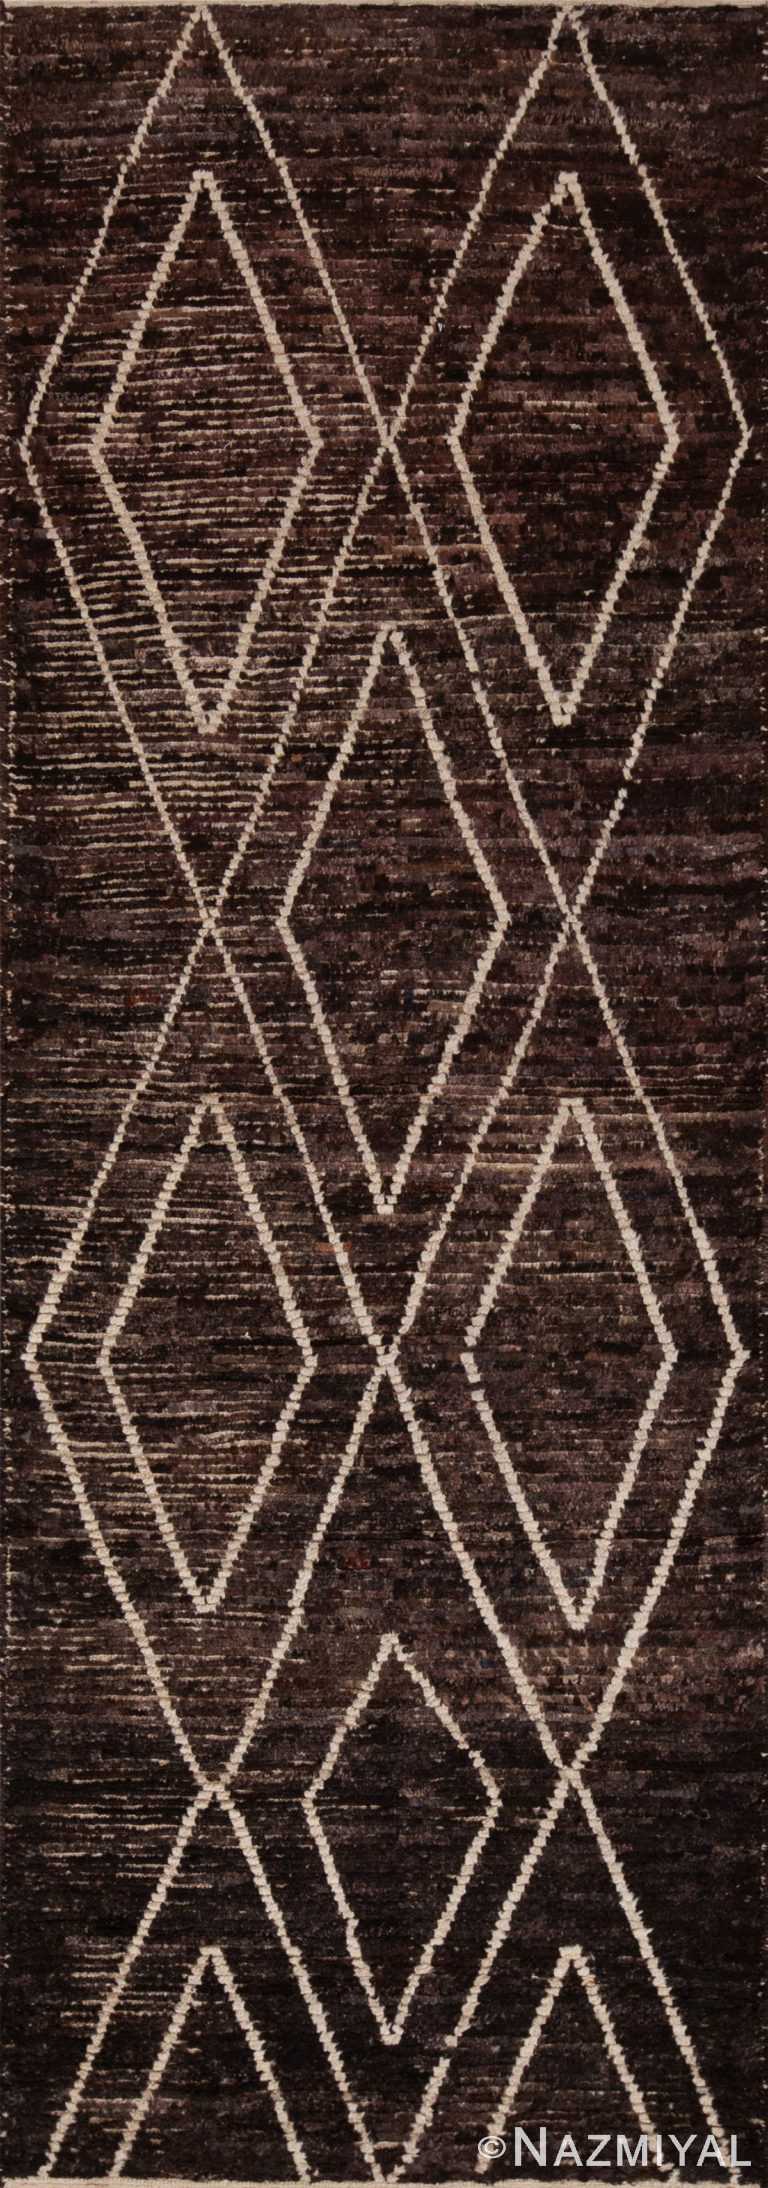 Tribal Geometric Diamond Pattern Modern Brown Hallway Runner Rug 11180 by Nazmiyal Antique Rugs